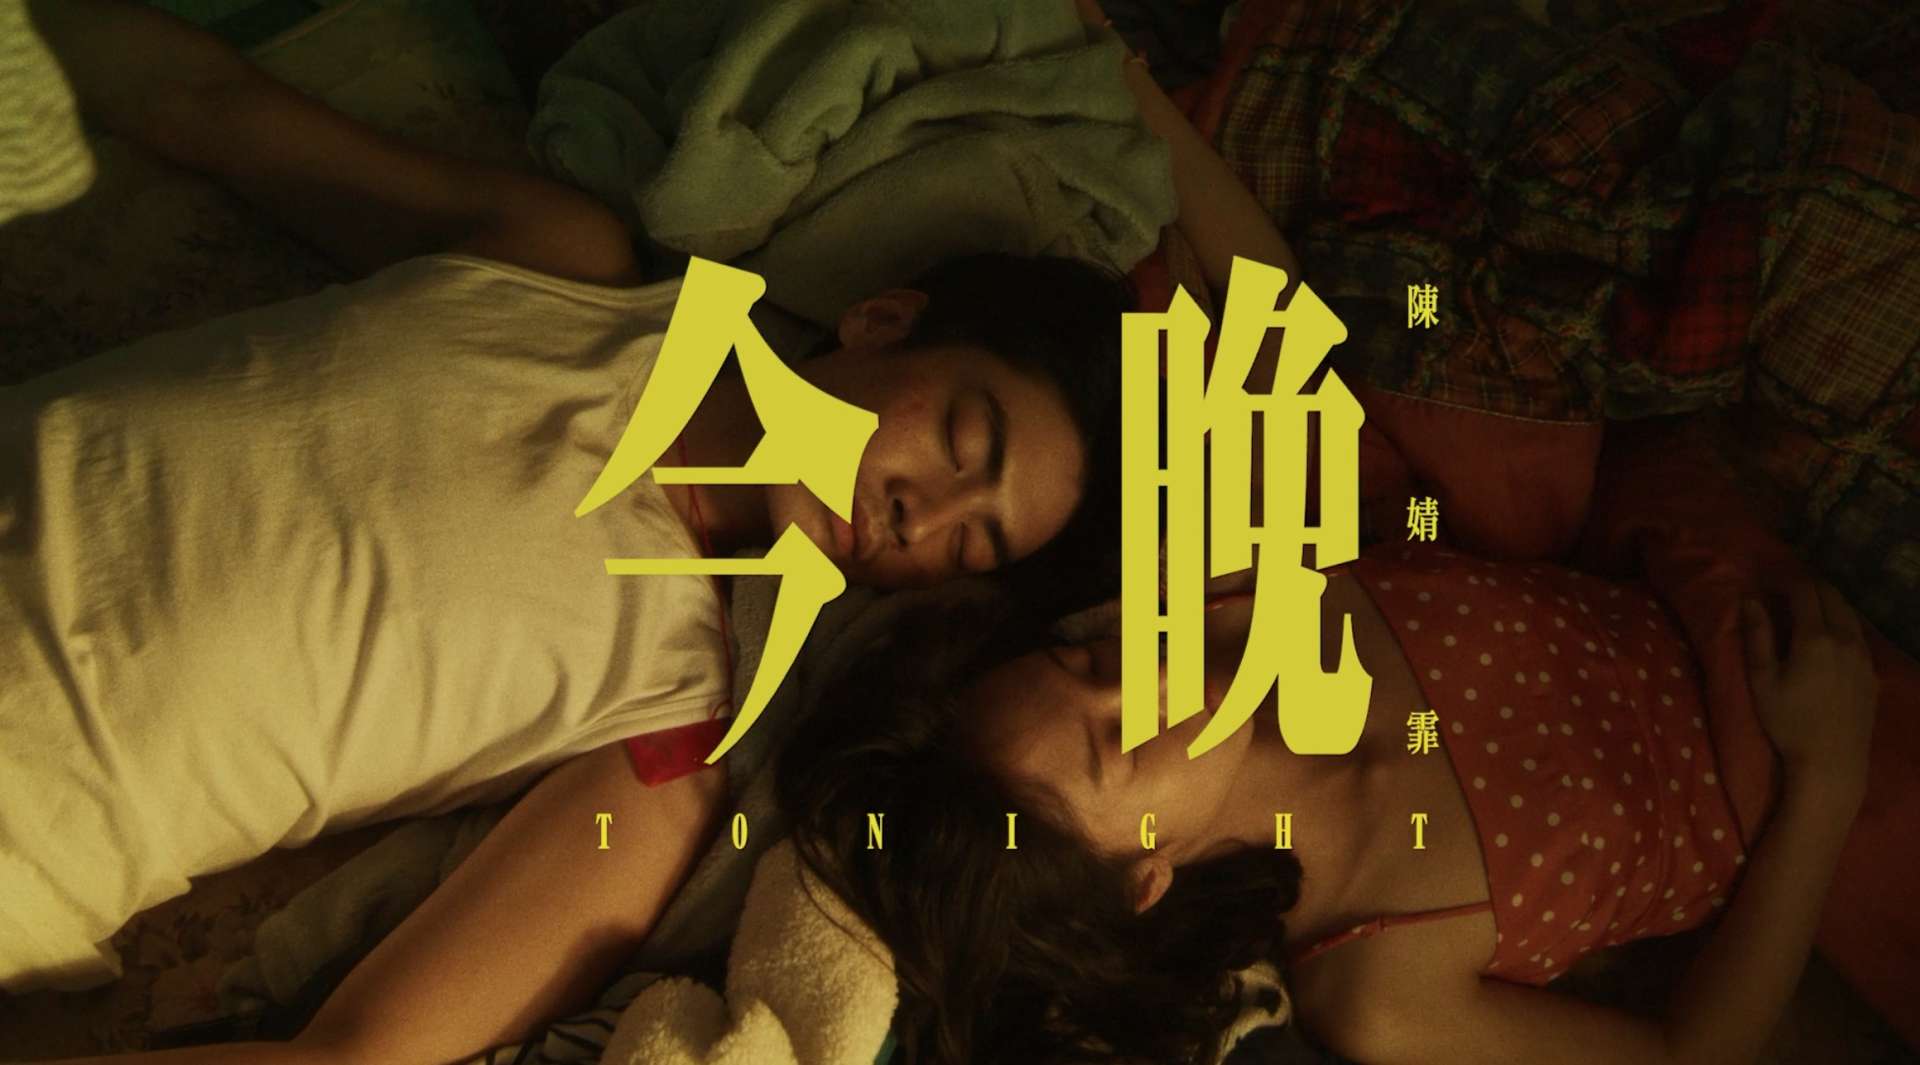 陳婧霏 Jingfei Chen - 今晚 tonight （Official Music Video)